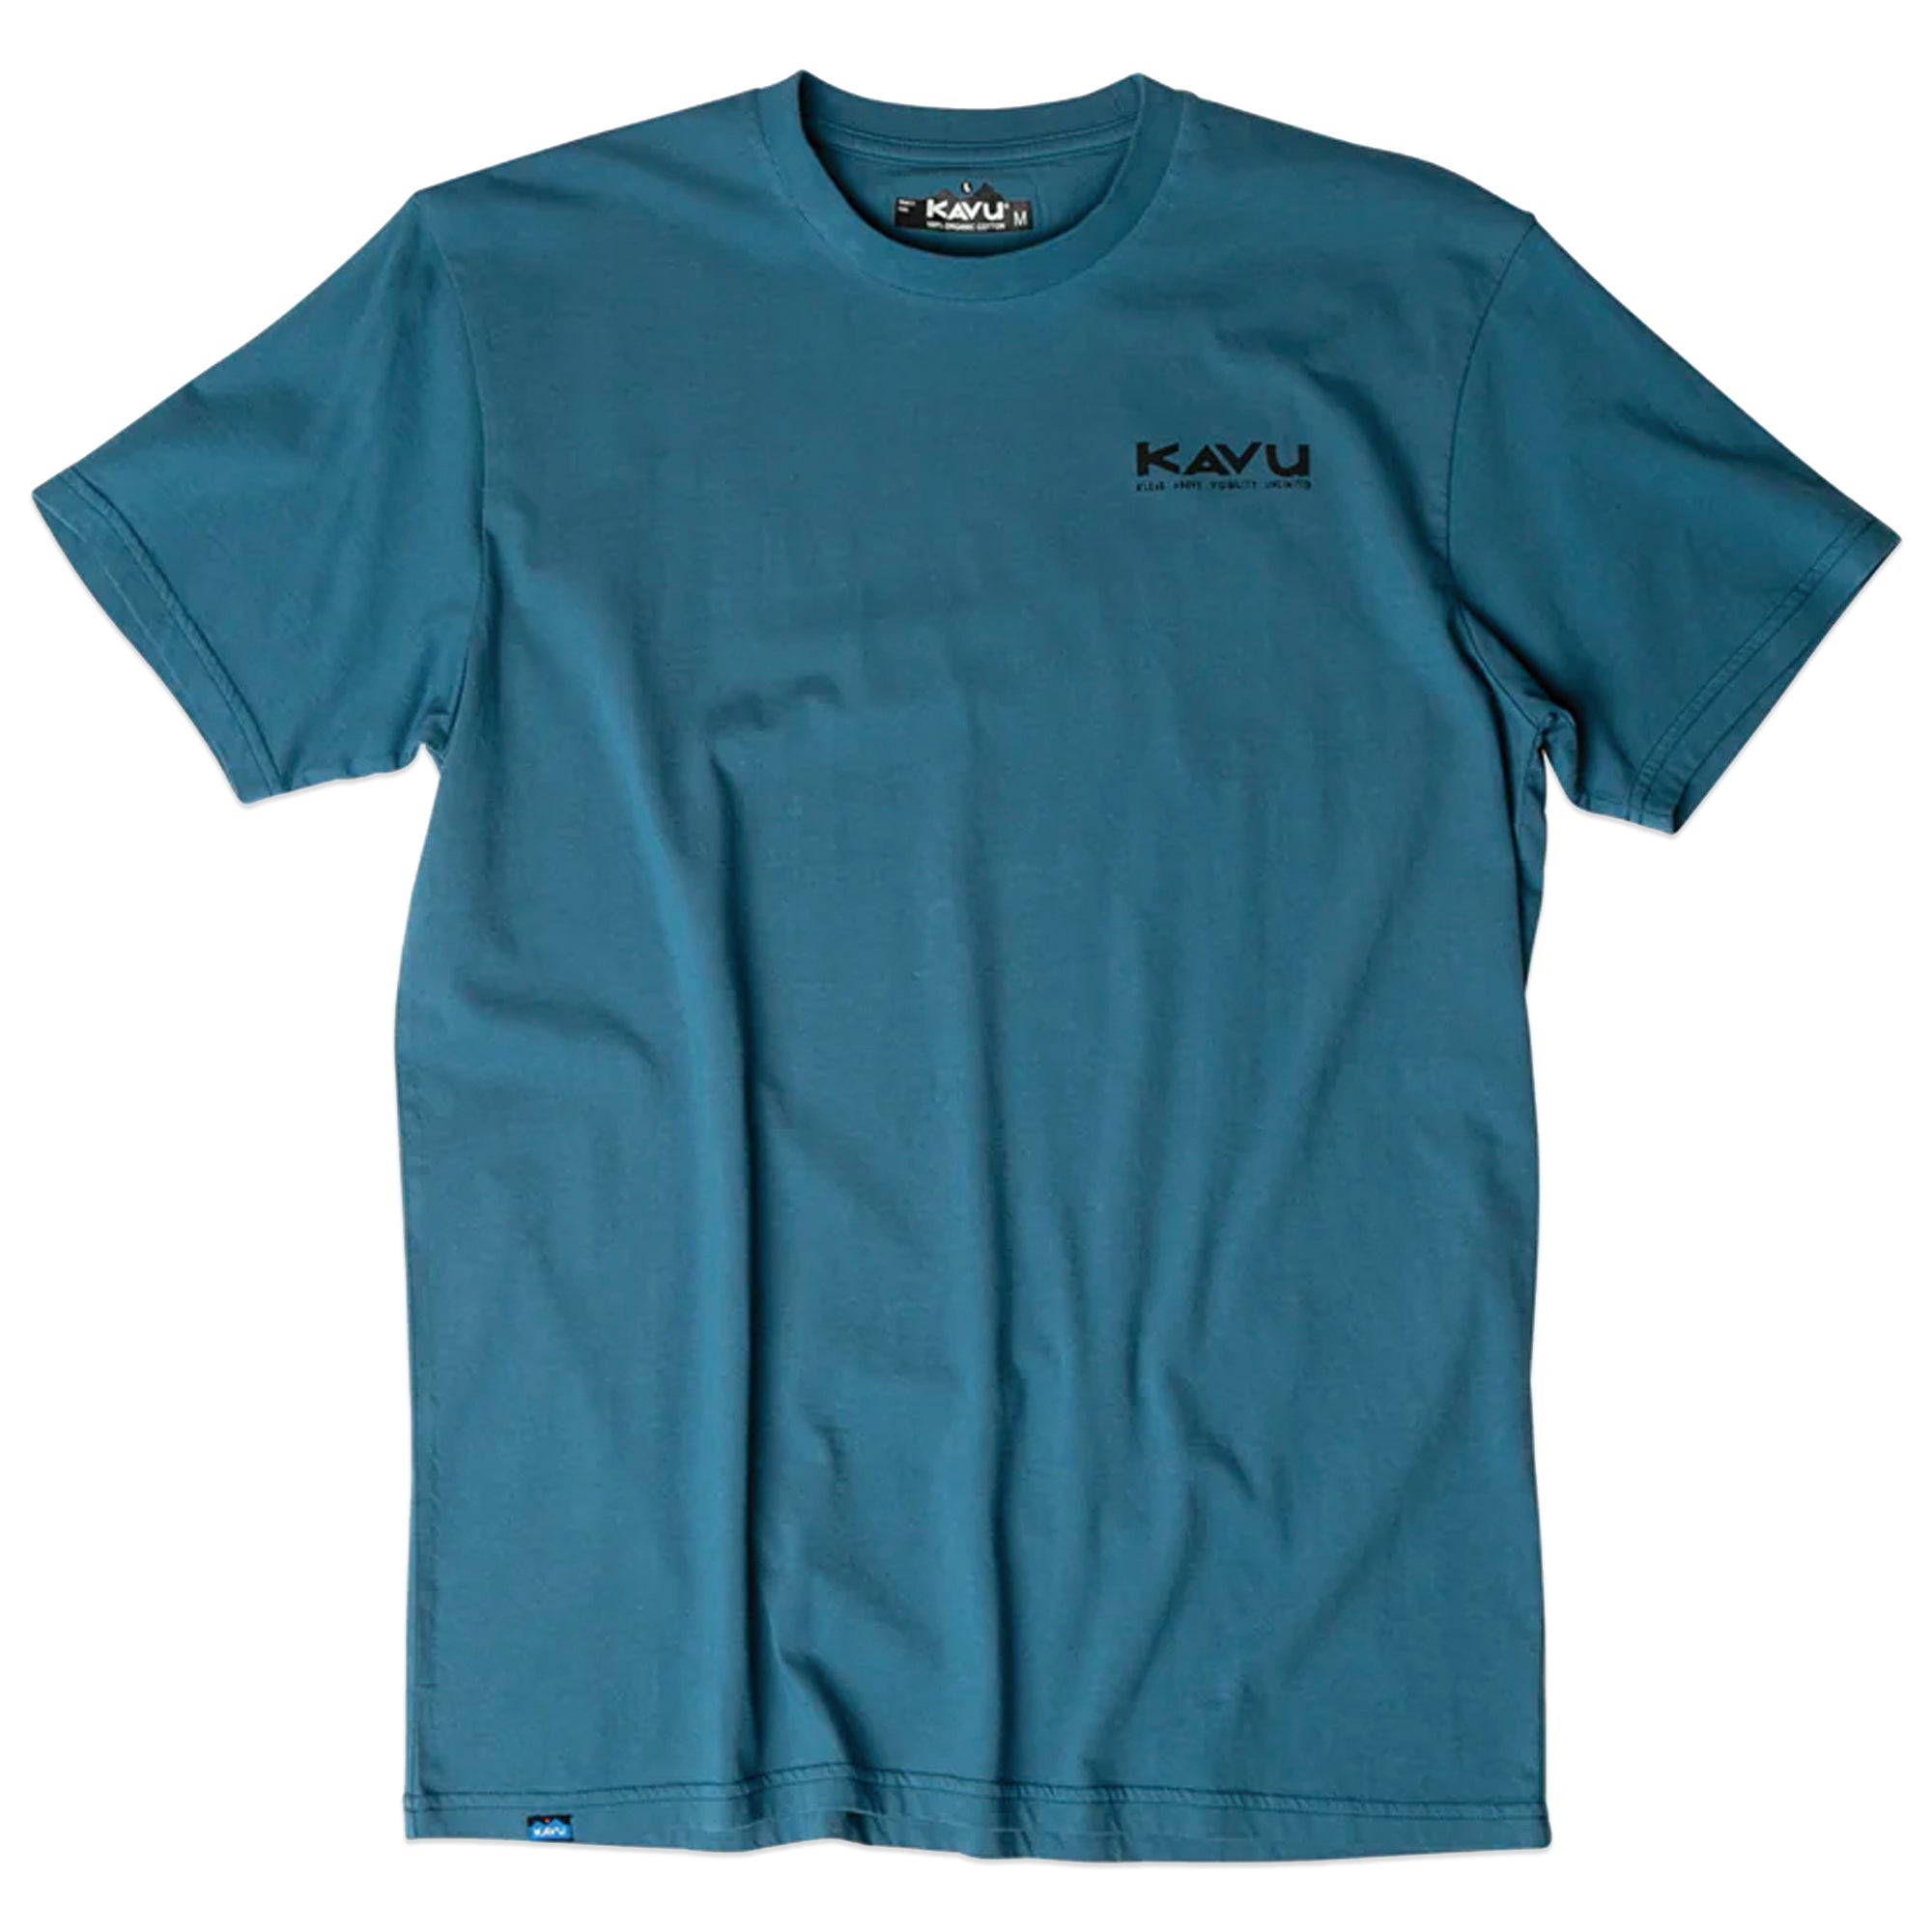 KAVU Klear Above Etch Art T-Shirt - Vintage Blue